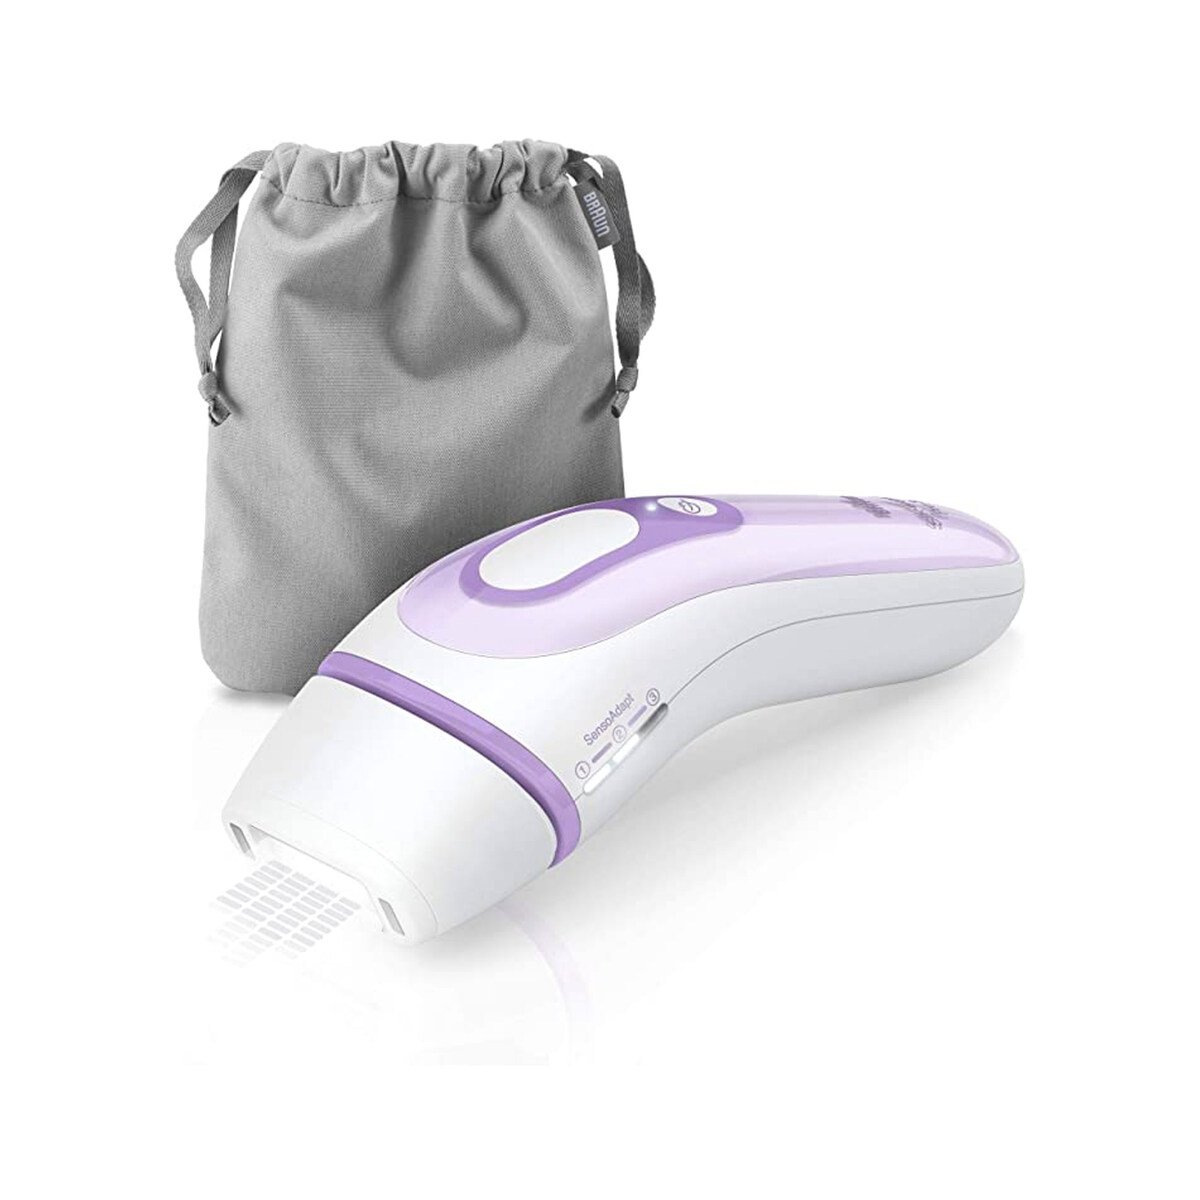 Braun Silk Expert Pro 3 IPL Hair Removal System PL3011 Online at